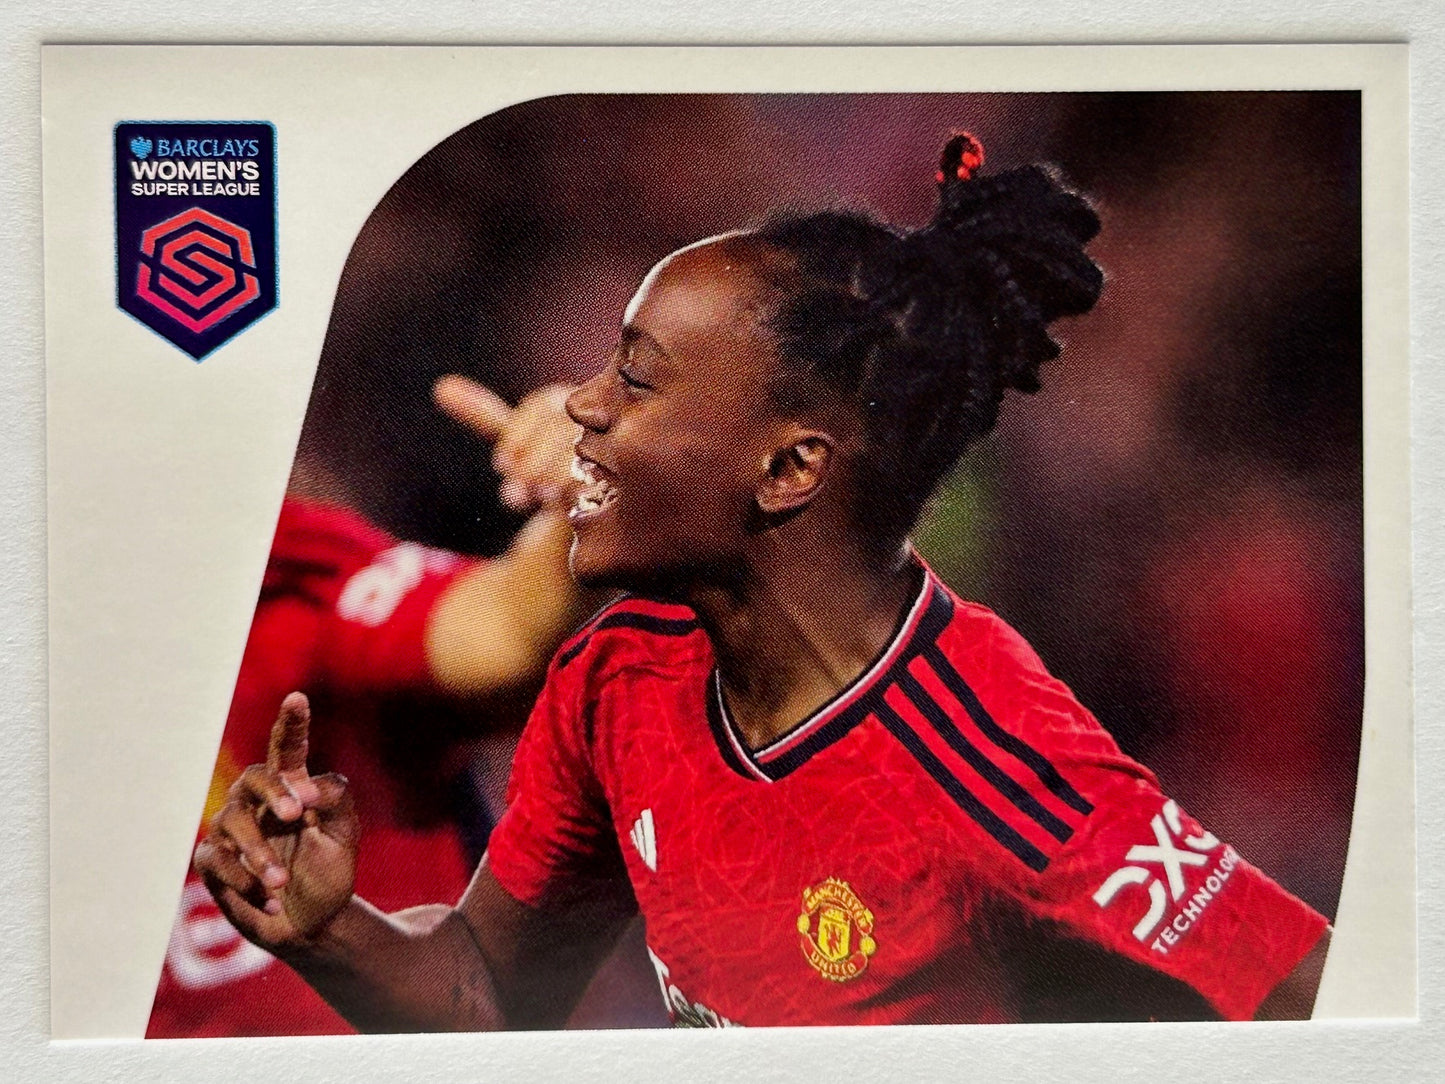 Panini Barclays Women's Super League 2024 - Single KEY PLAYERS (MAN CITY & MAN UTD) Stickers (#326 - #337)